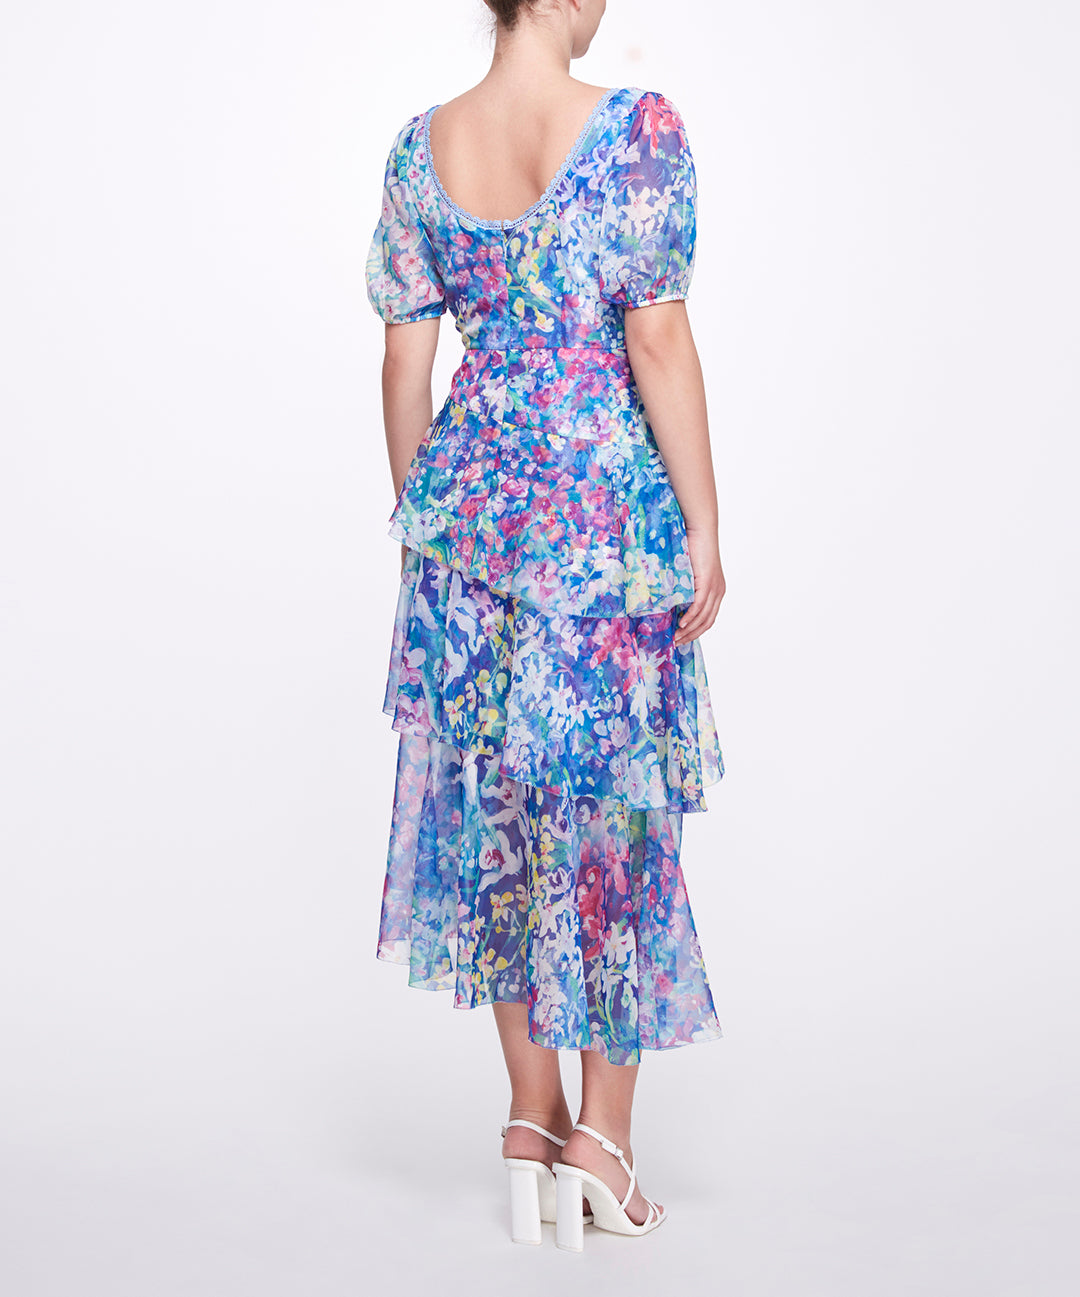 Sweetheart Neckline Cattleya Printed Chiffon Tiered Dress Marchesa